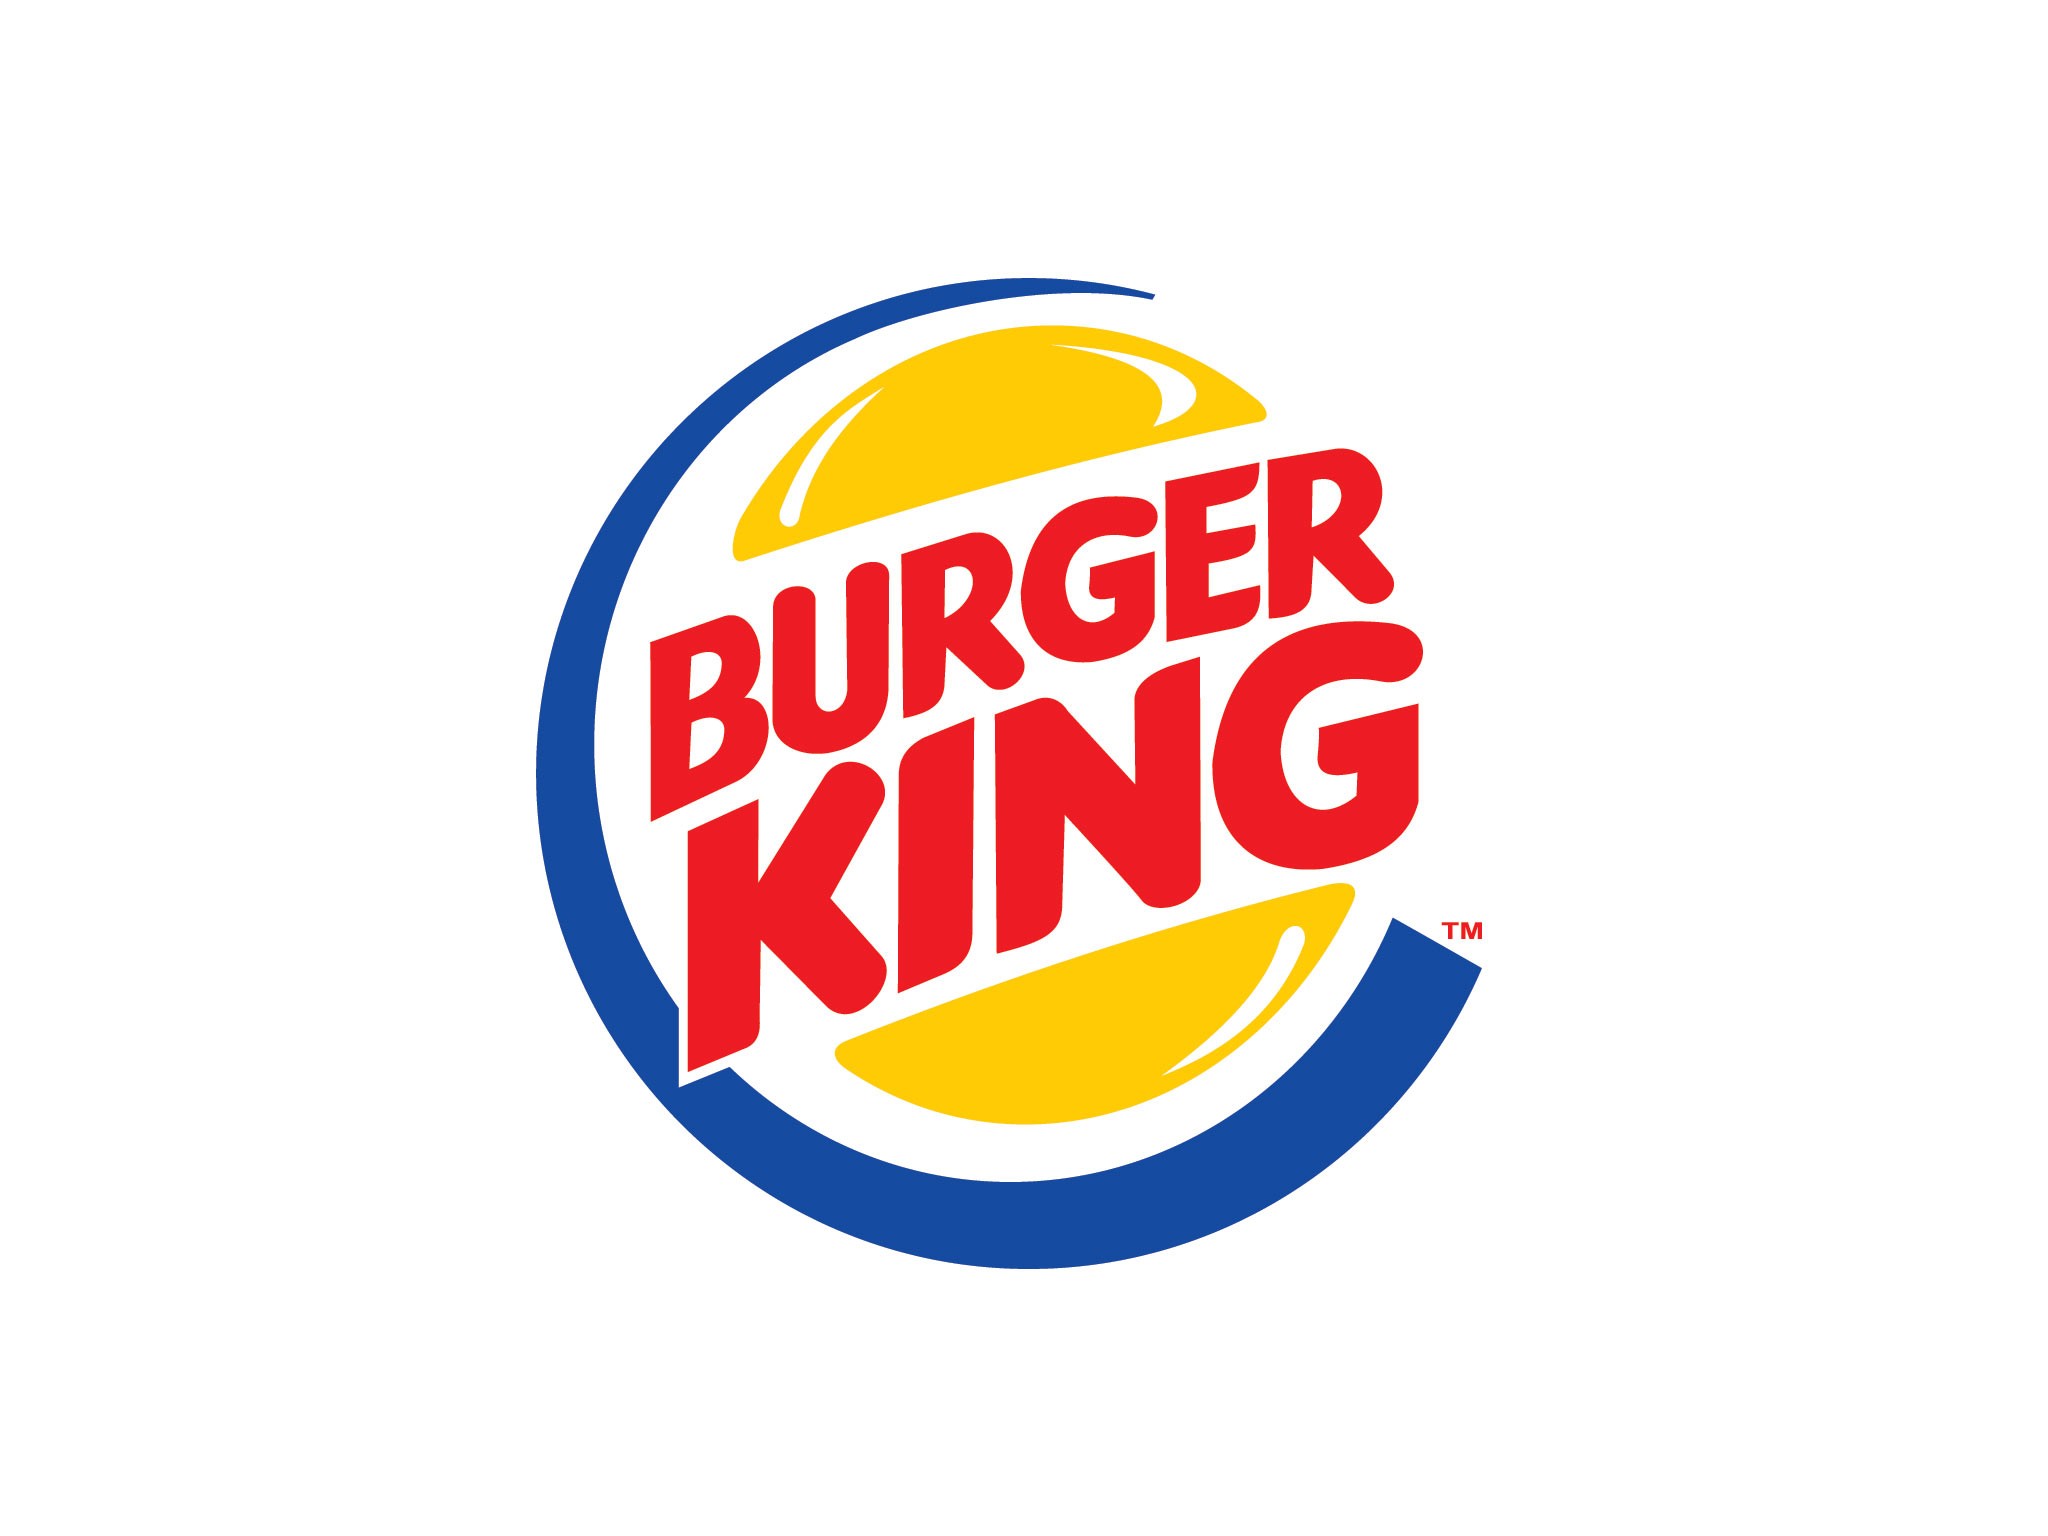 Download King Whopper Hamburger Restaurant Burger Logo HQ PNG Image |  FreePNGImg